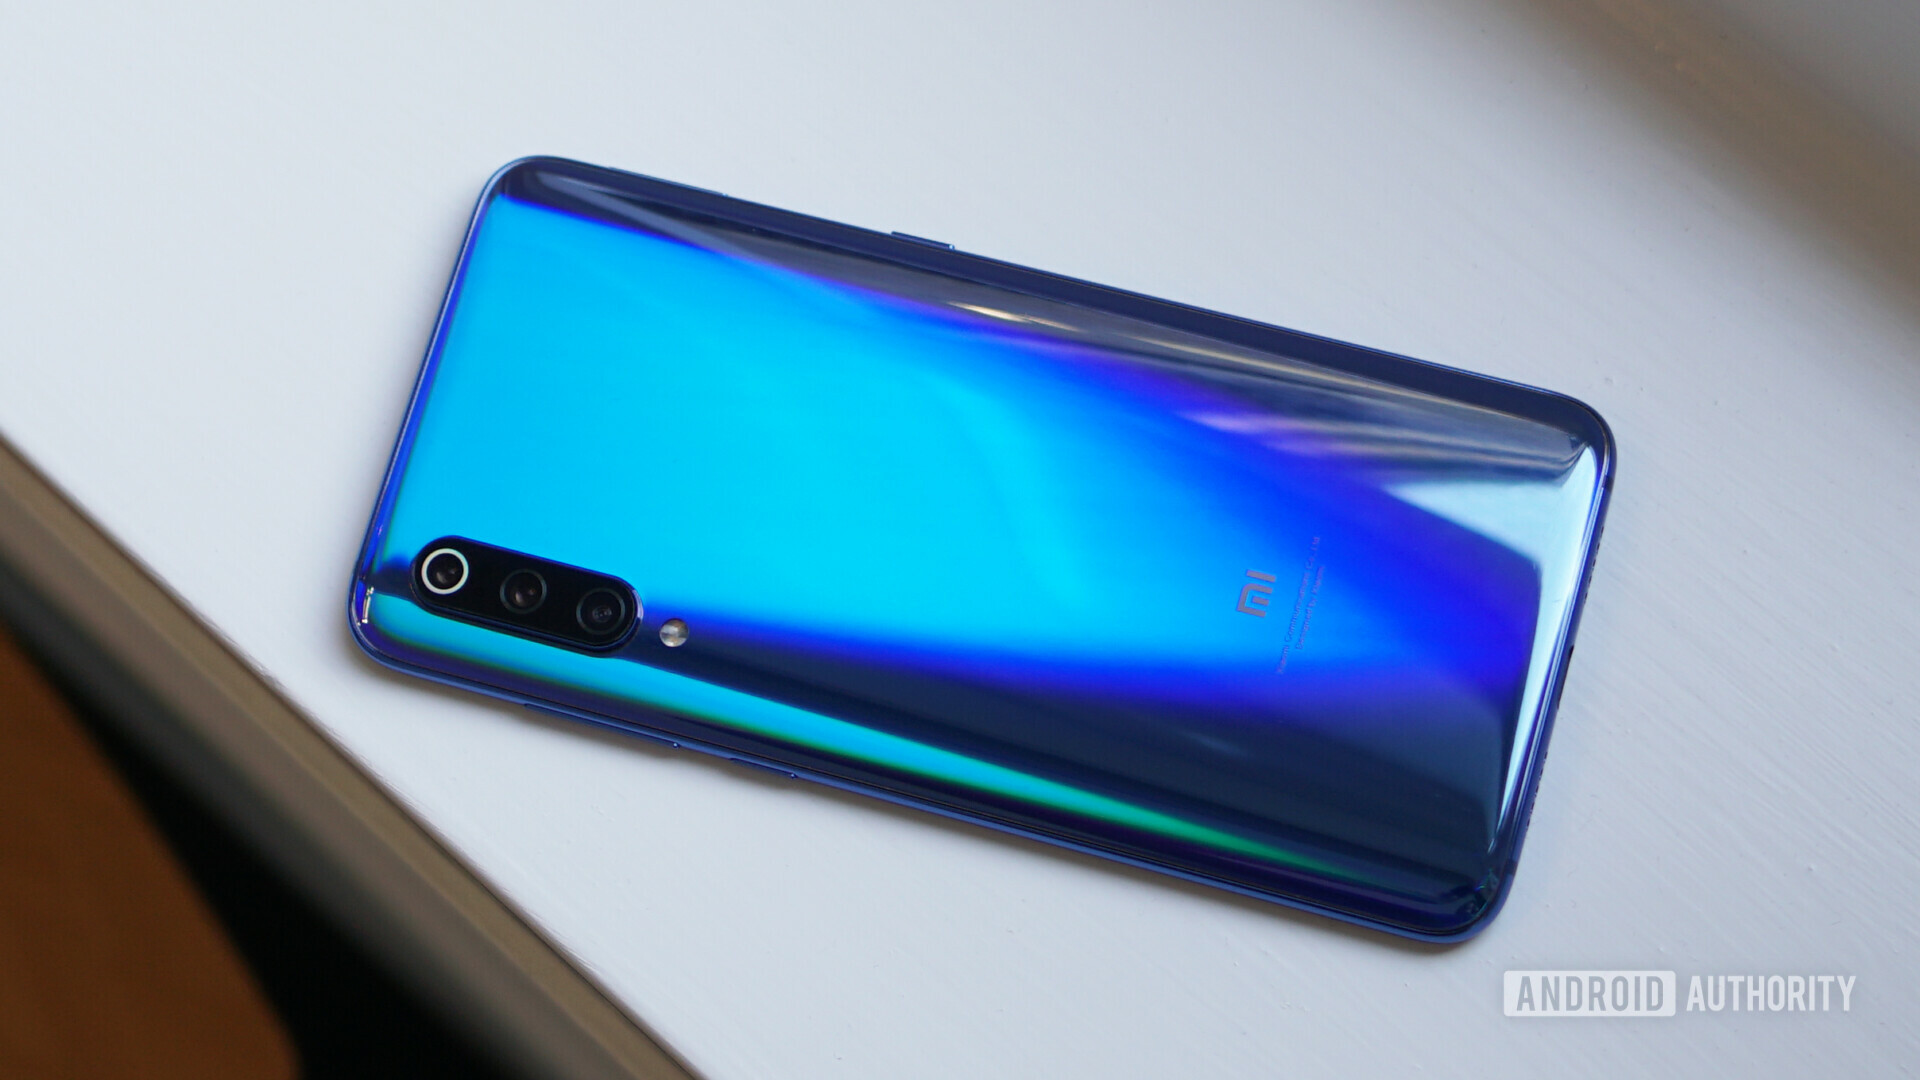 Xiaomi Mi 9 blue back panel